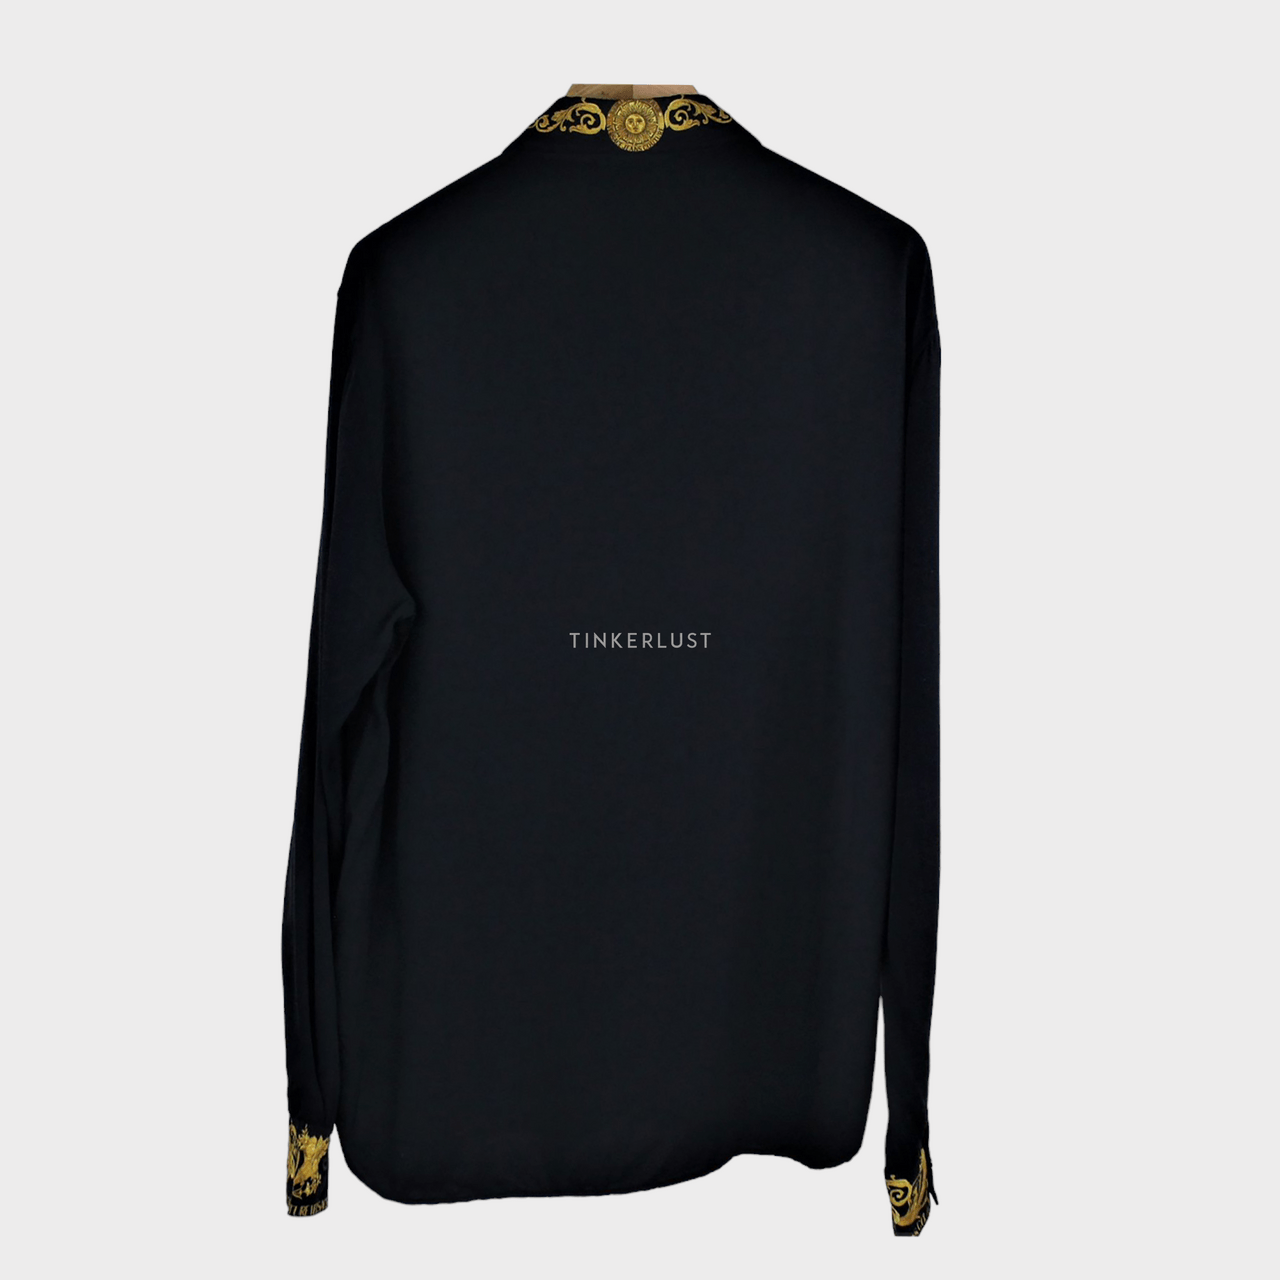 Versace Jeans Couture Black Print Detail Shirt